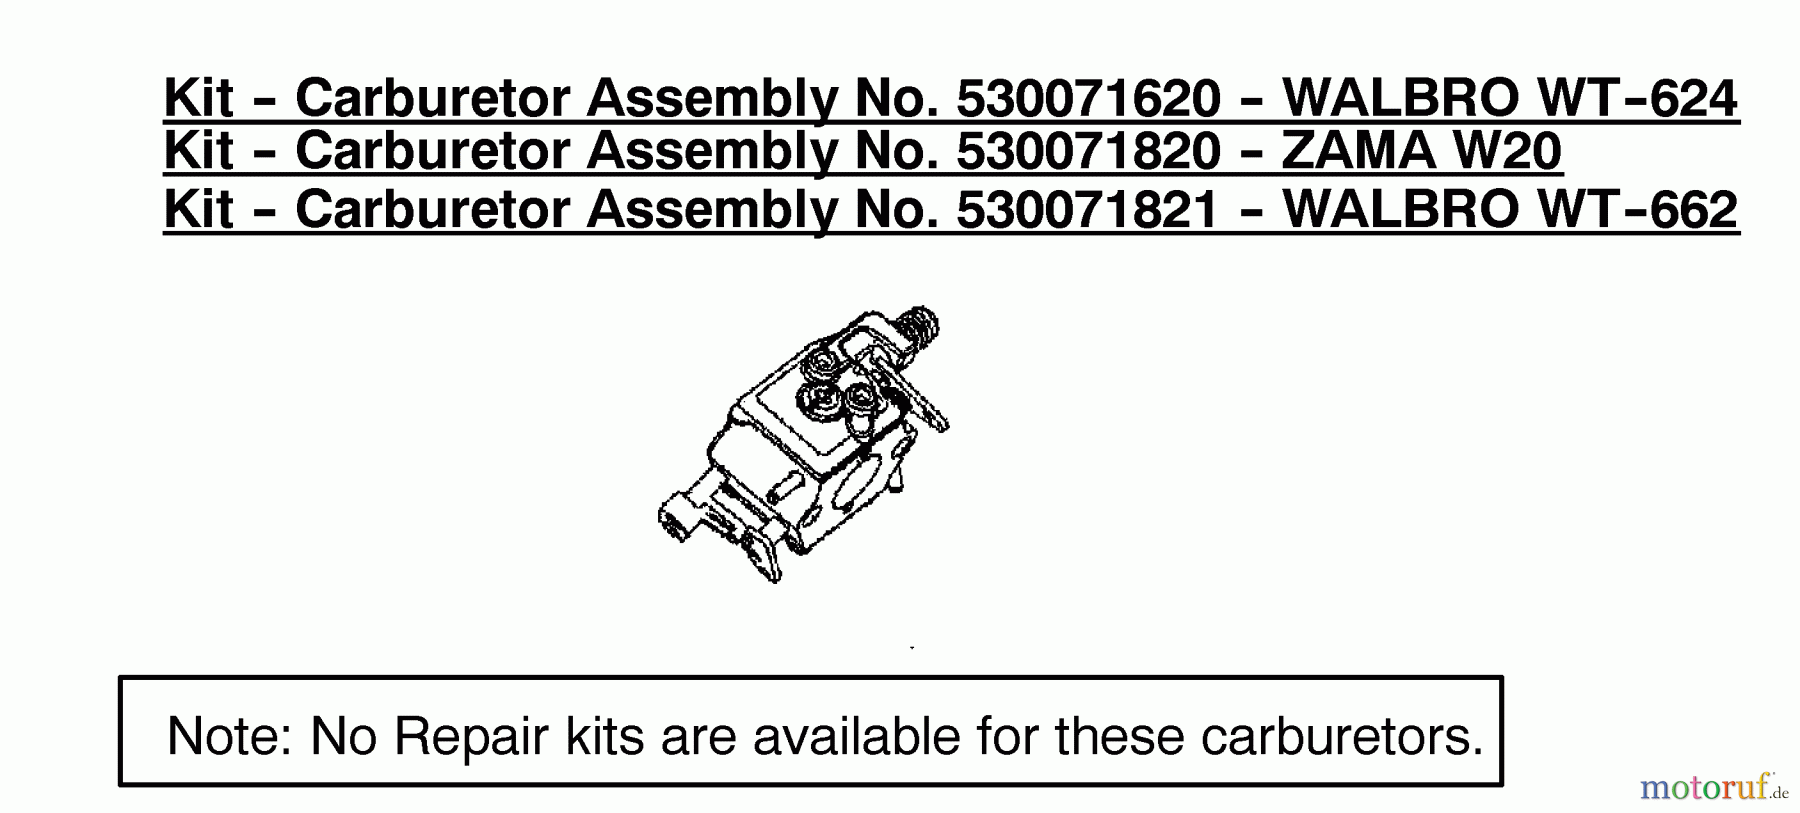  Poulan / Weed Eater Motorsägen 2055 (Type 5) - Poulan Woodsman Chainsaw Kit - Carburetor Assembly 530071820/530071821/530071620